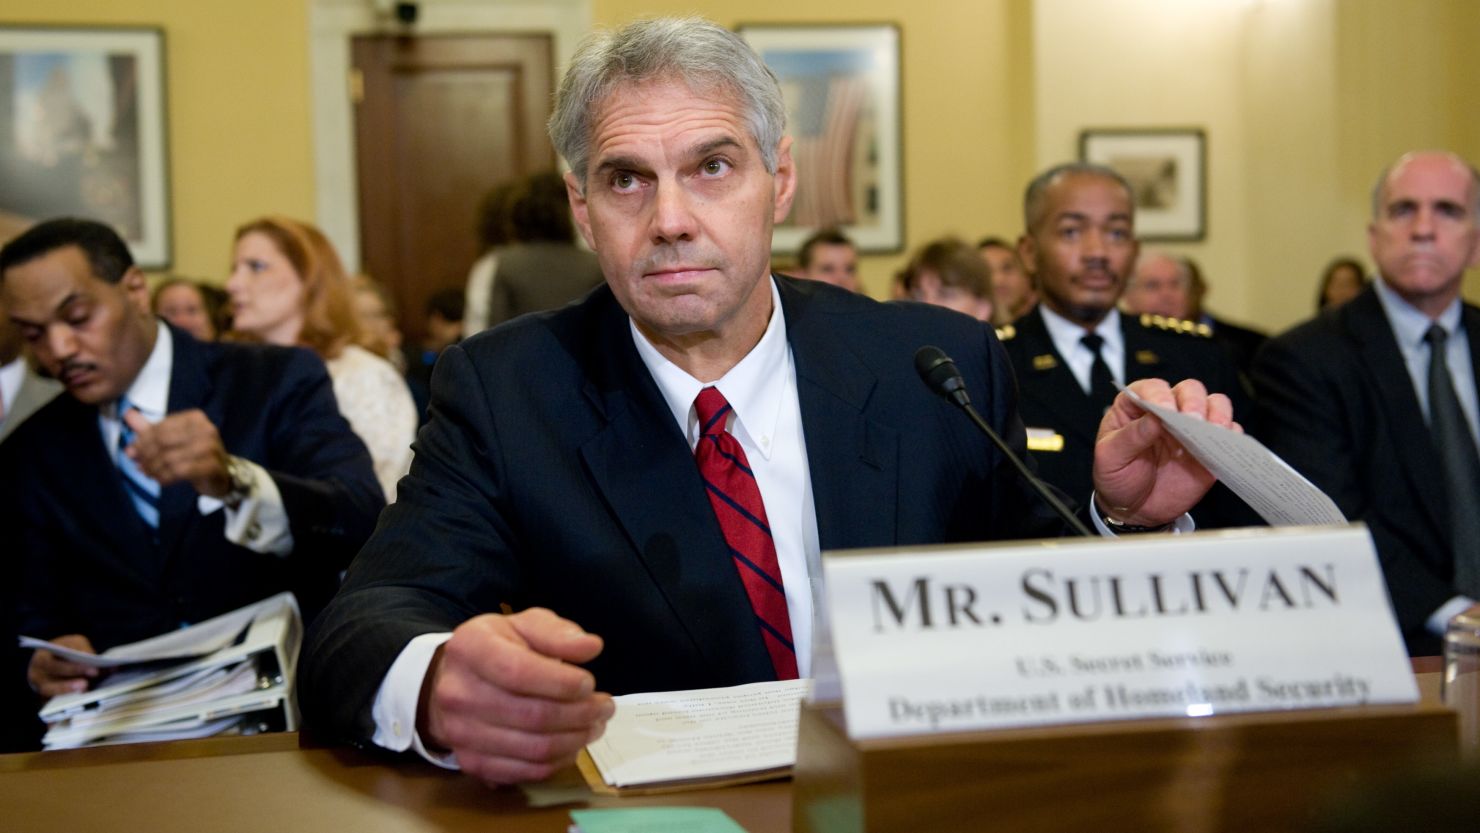 Mark Sullivan has been Secret Service director since 2006. The president's spokesman has expressed confidence in Sullivan.